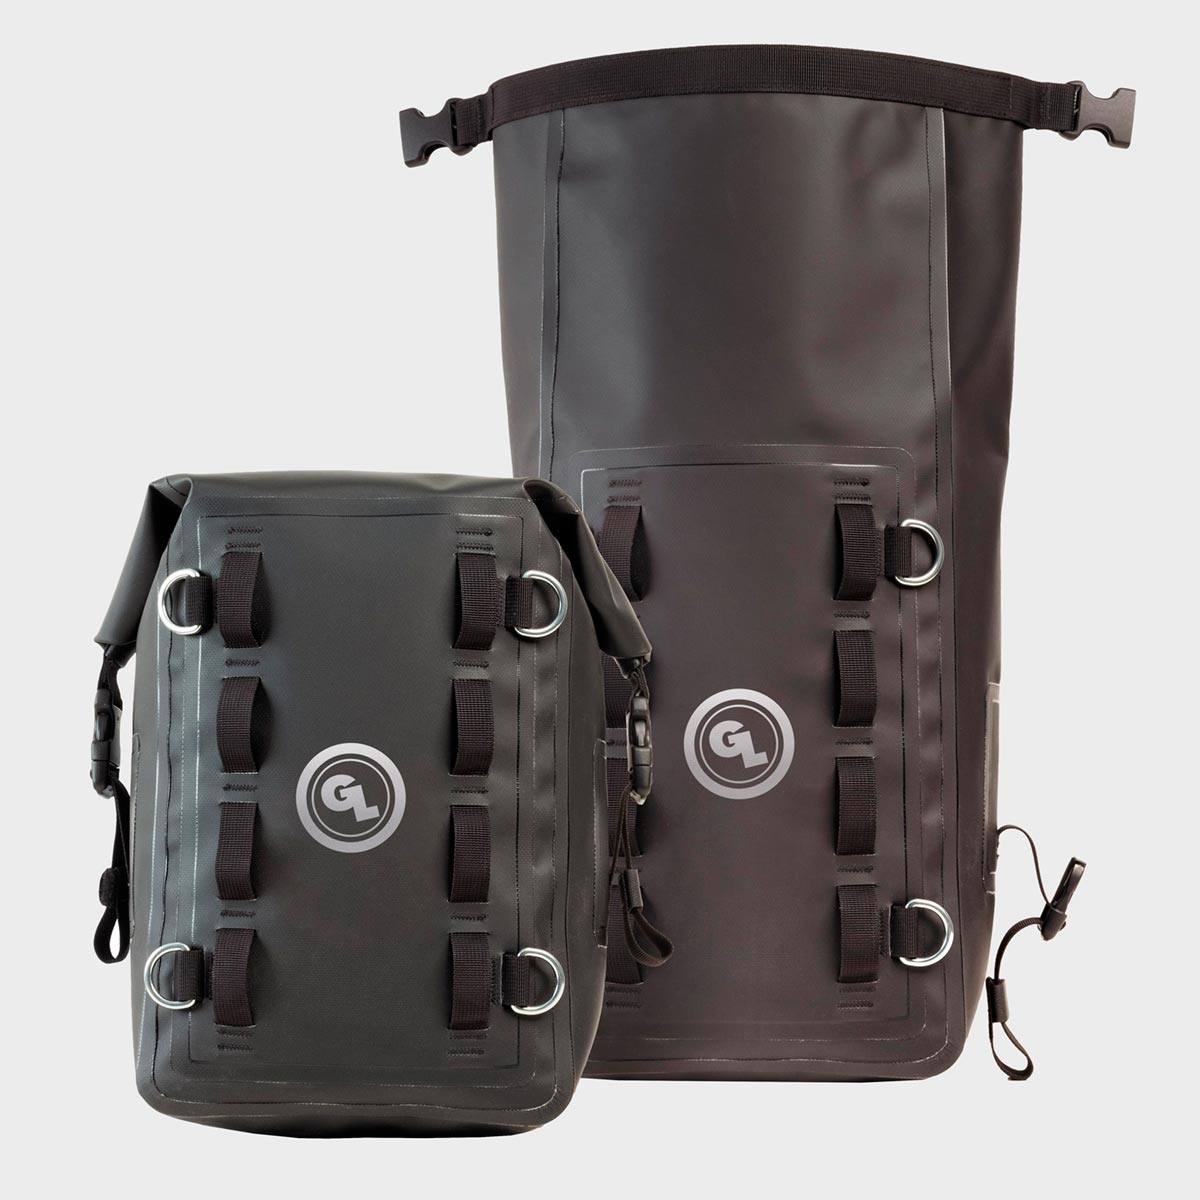 BORLENI Motorcycle Dry Bag Waterproof Motorcycle Luggage Bag Motorcycle  Duffel Bag for Skiing Travel Hiking Camping 